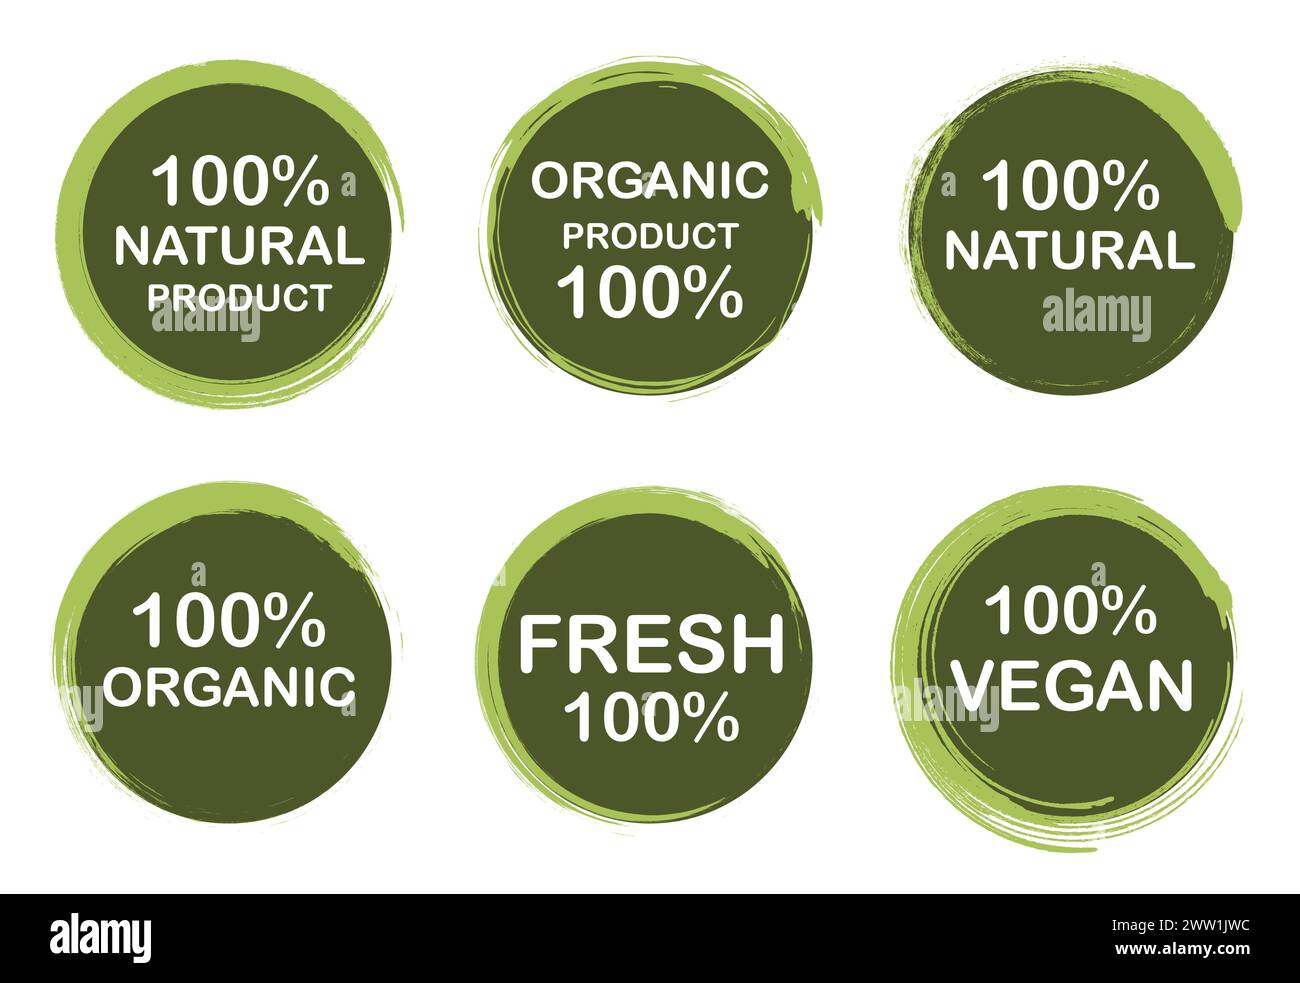 Natural product, natural farming, vegan food, organic, eco, vegetarian labels paint brush strokes collection. Stock Vector